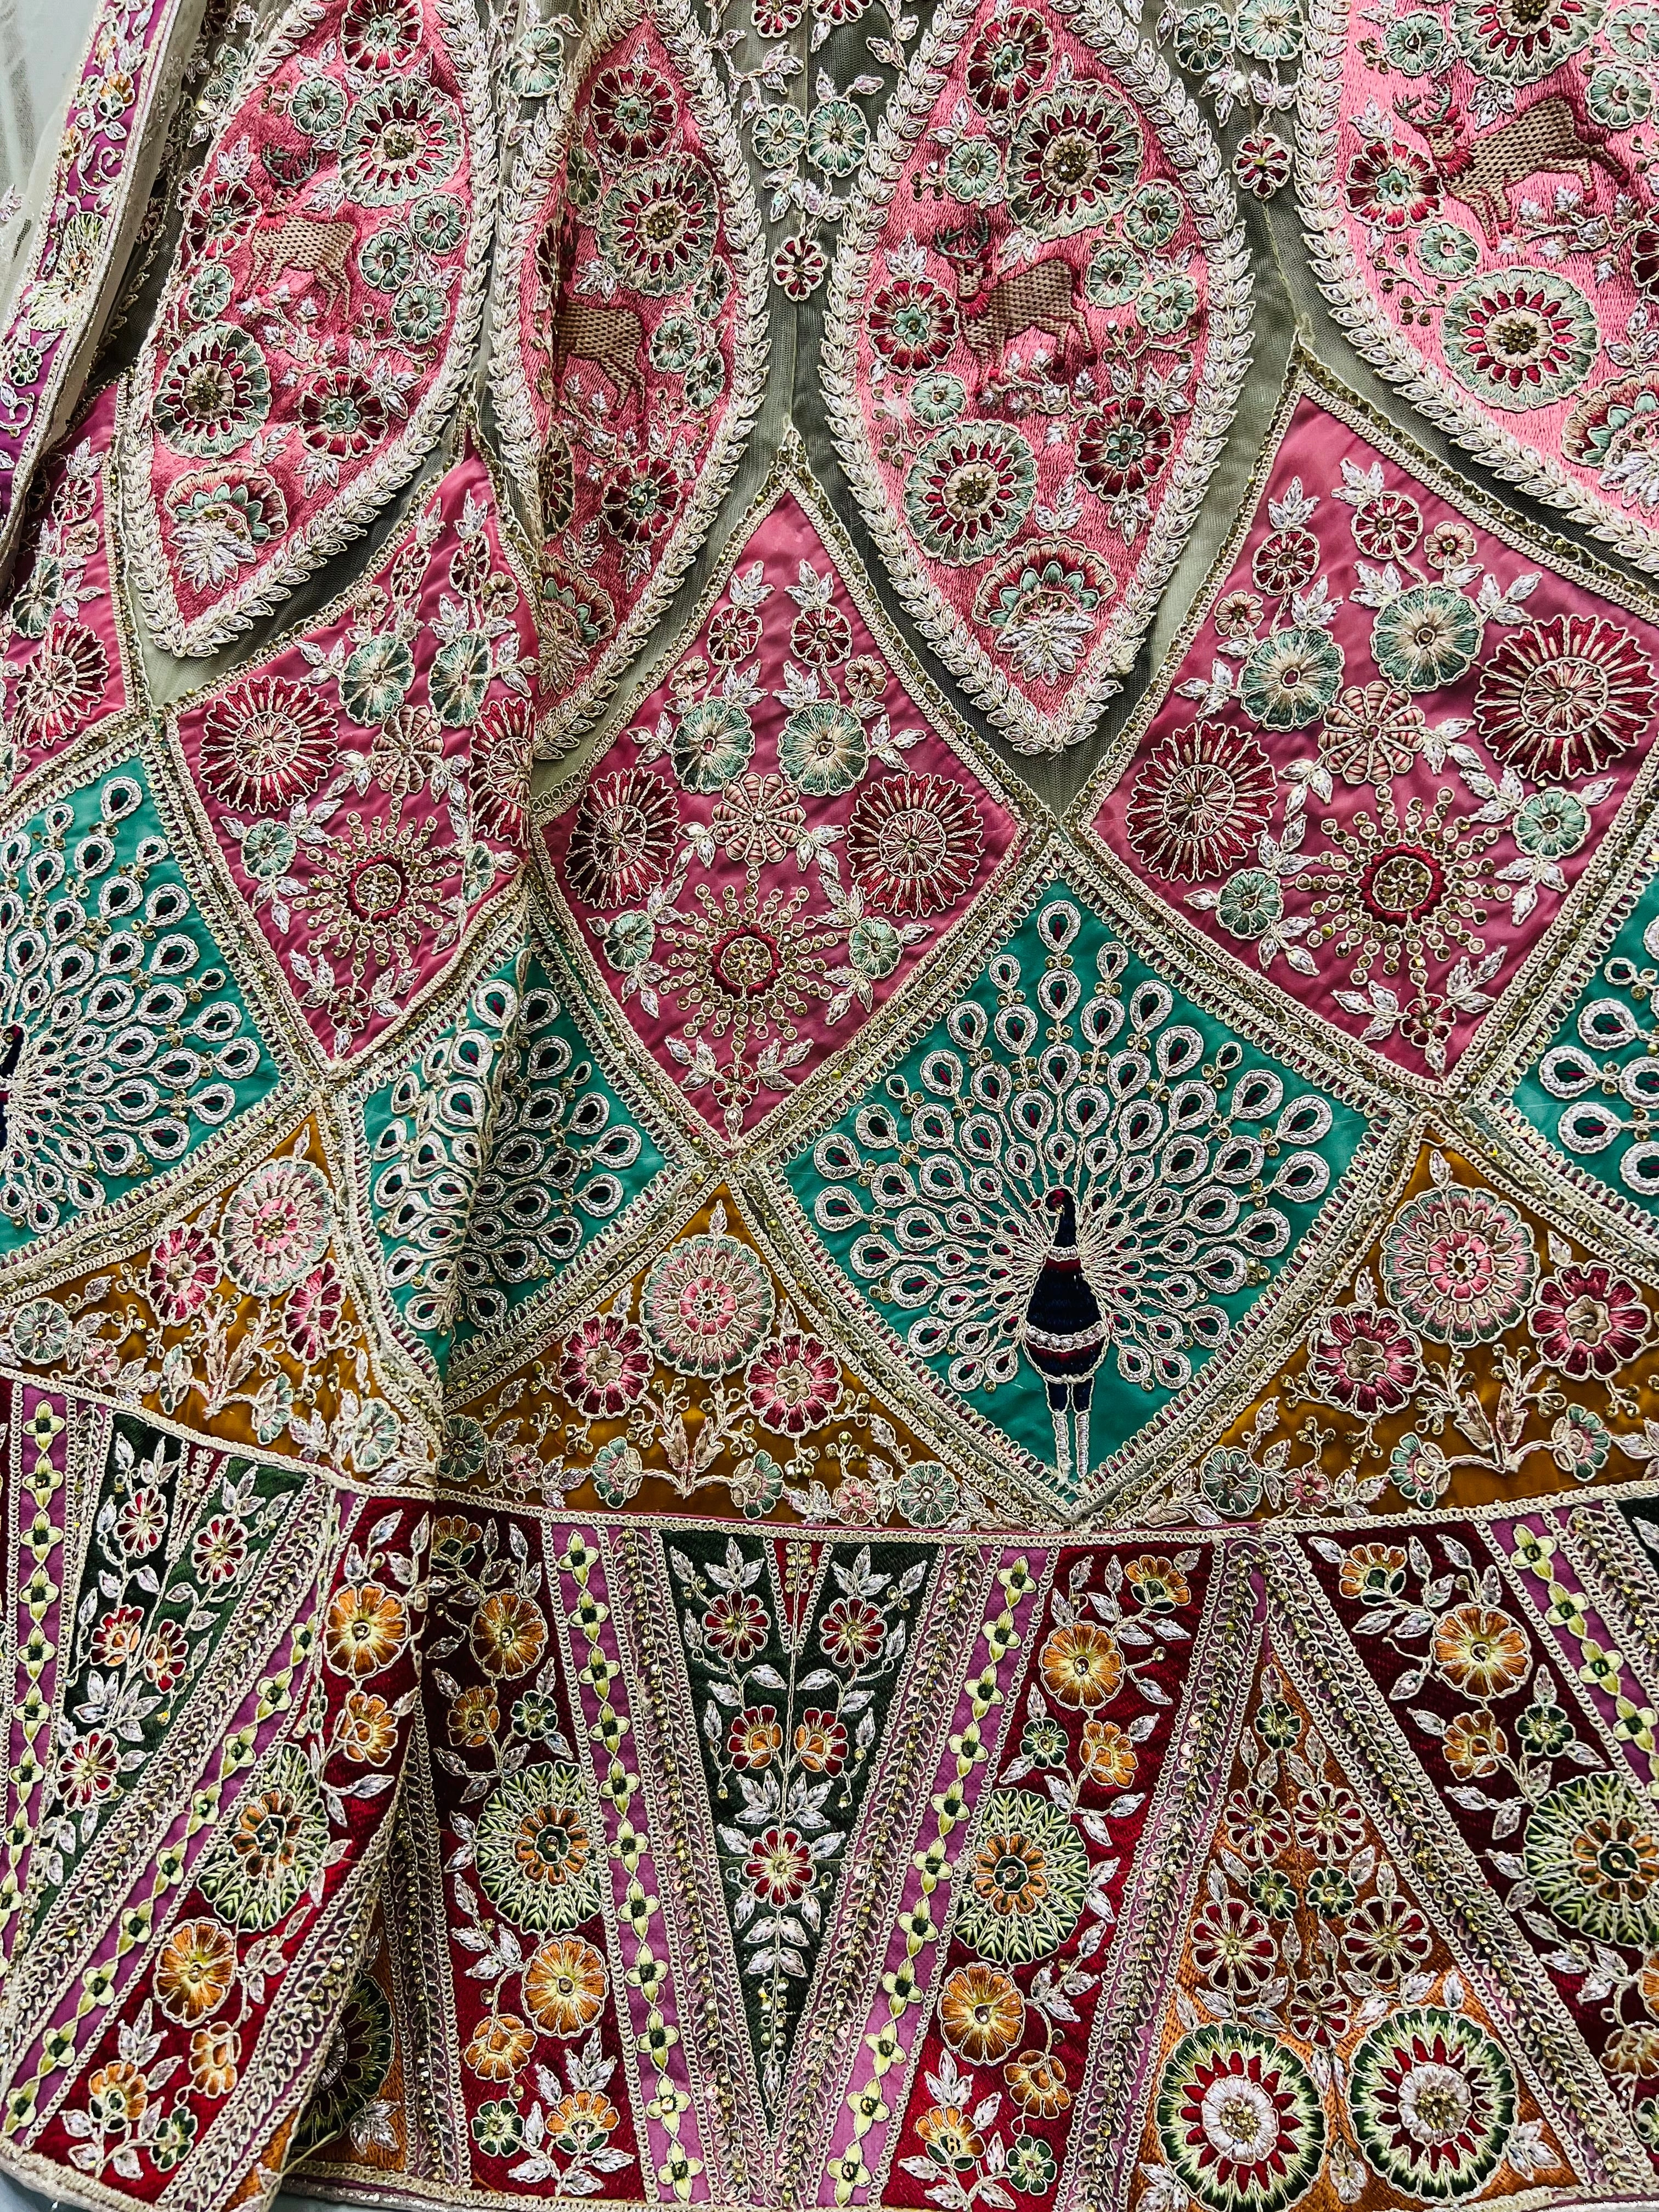 Pink Designer Patchwork Bridal Lehenga Choli - Peacock, Deer &amp; Flower Motifs - Net Fabric -Summer Wedding Outfit,Indian Bridal Lehenga Choli-3